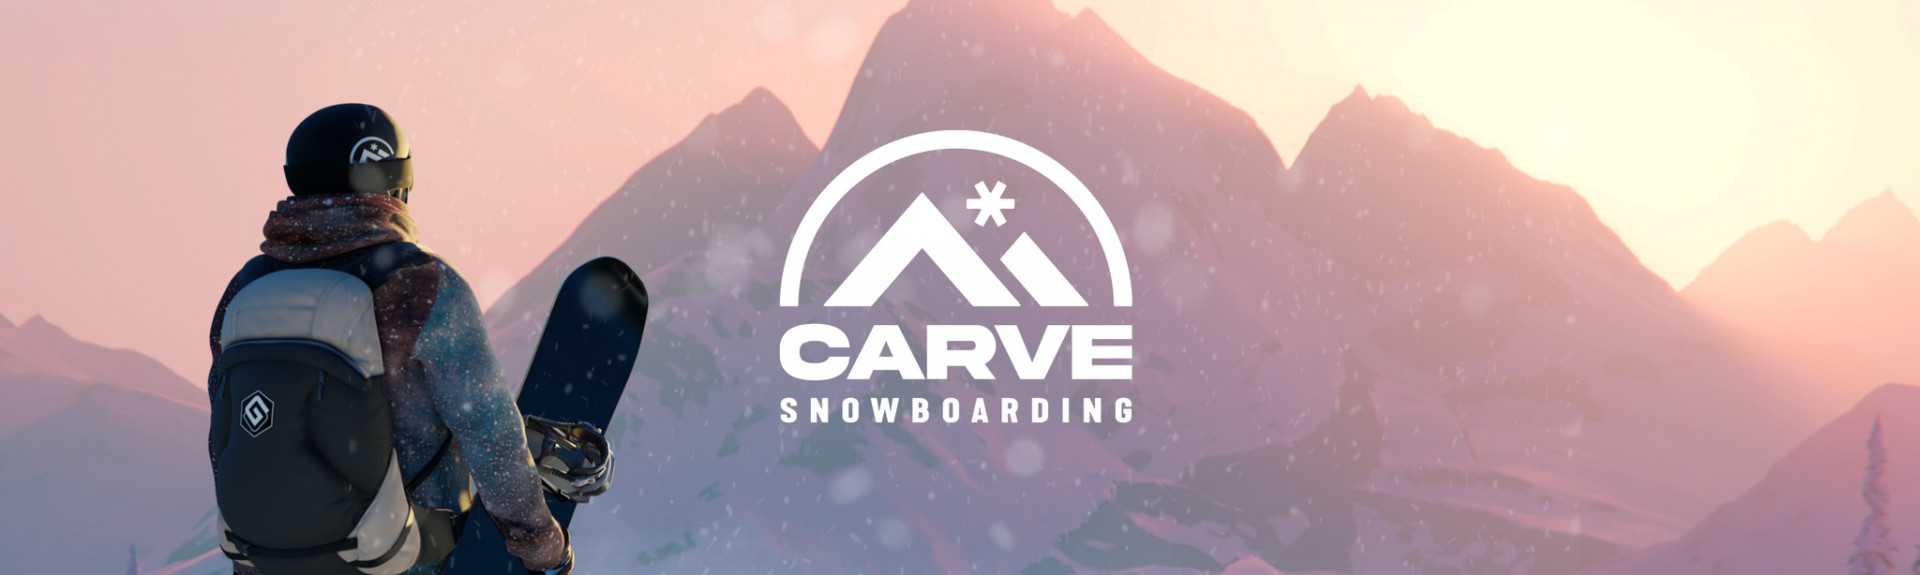 Carve Snowboarding: ANÁLISIS